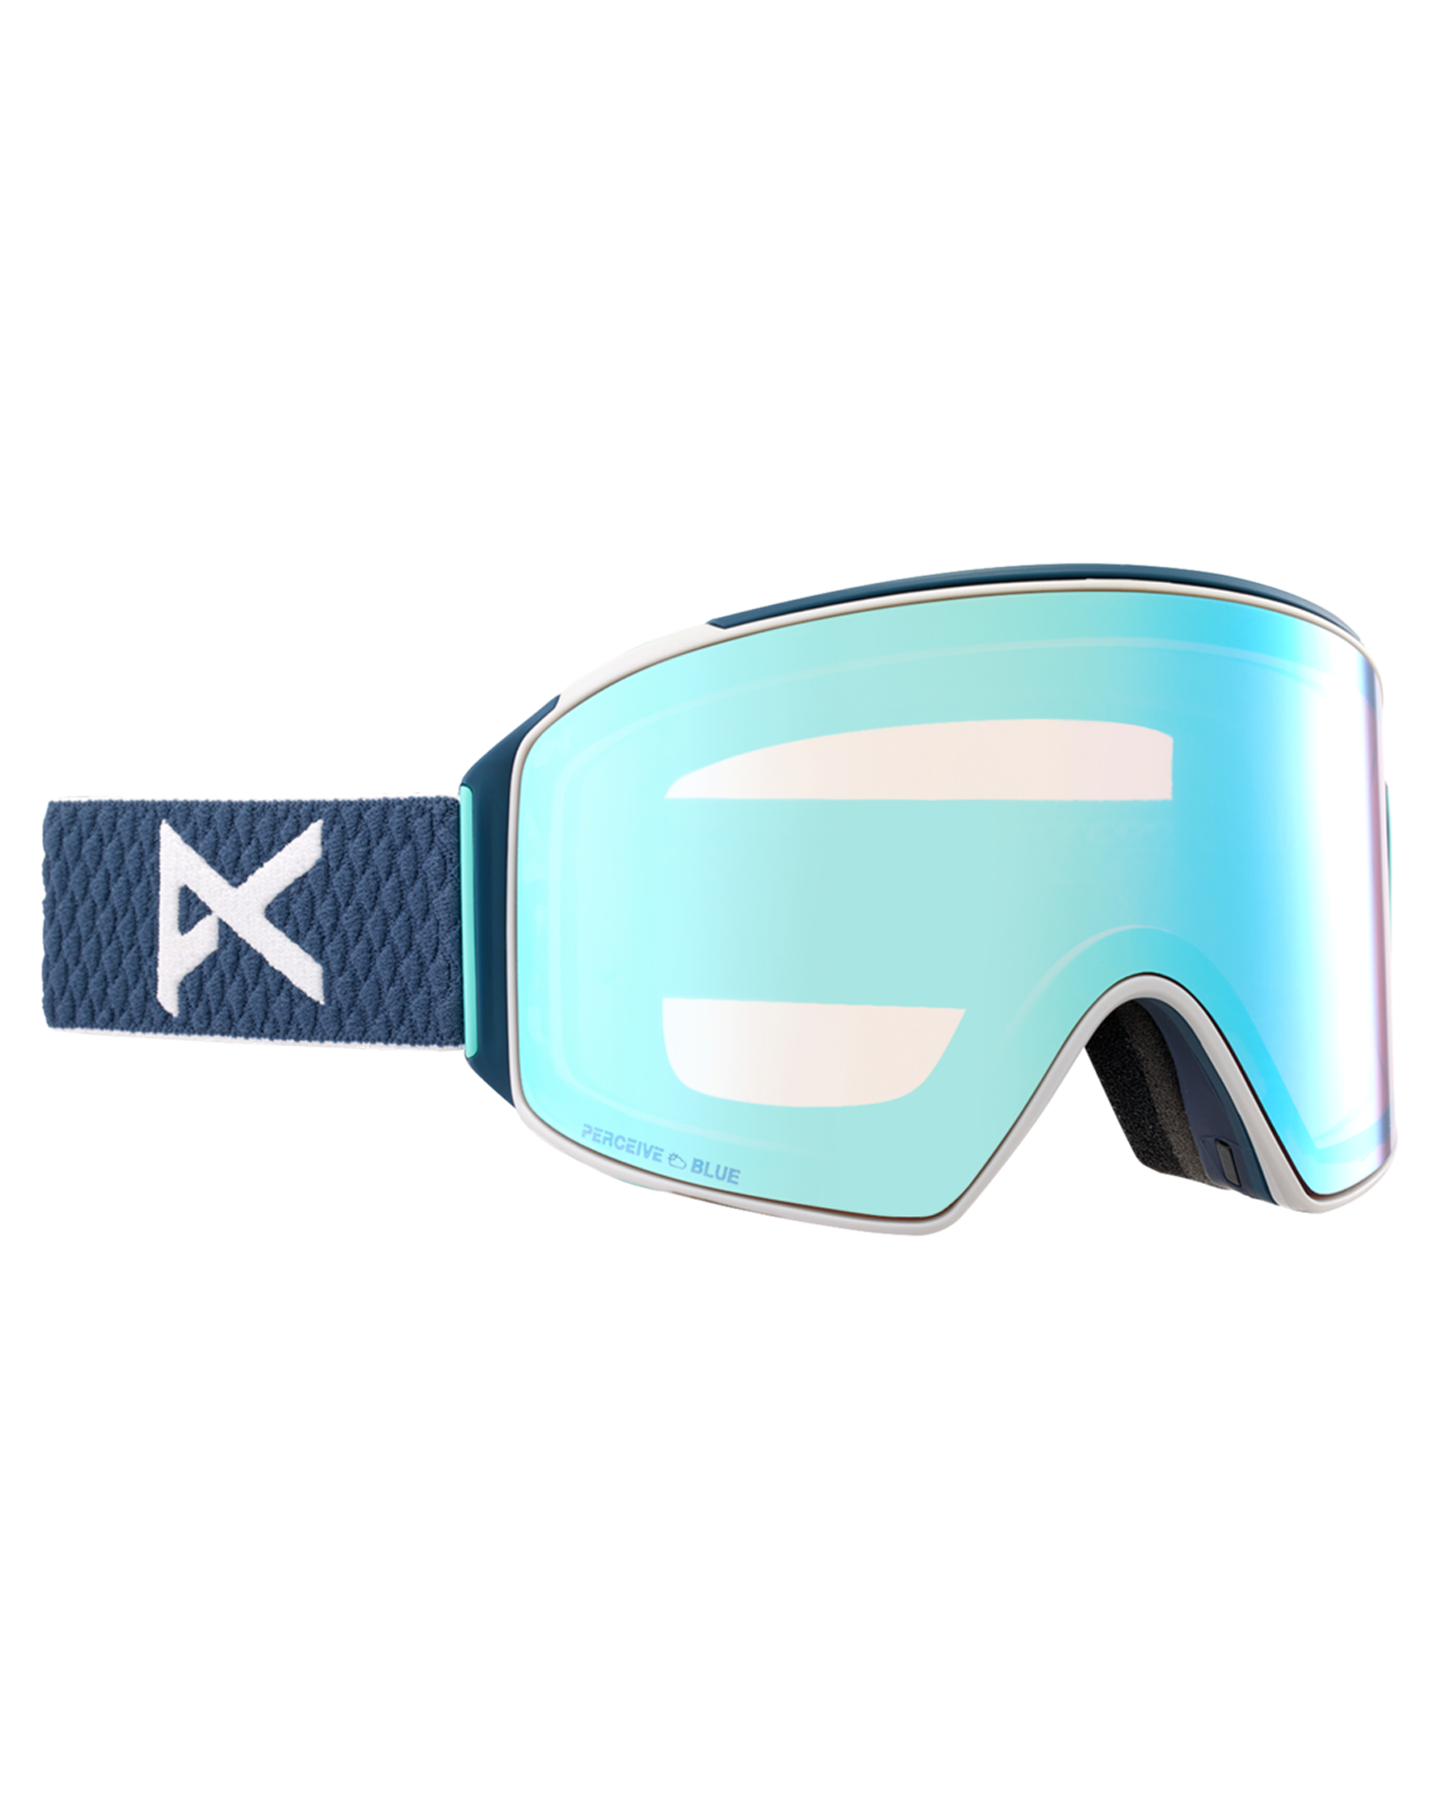 Anon M4 Cylindrical Snow Goggles + Bonus Lens + MFI - Nightfall / Perceive Variable Blue Men's Snow Goggles - SnowSkiersWarehouse